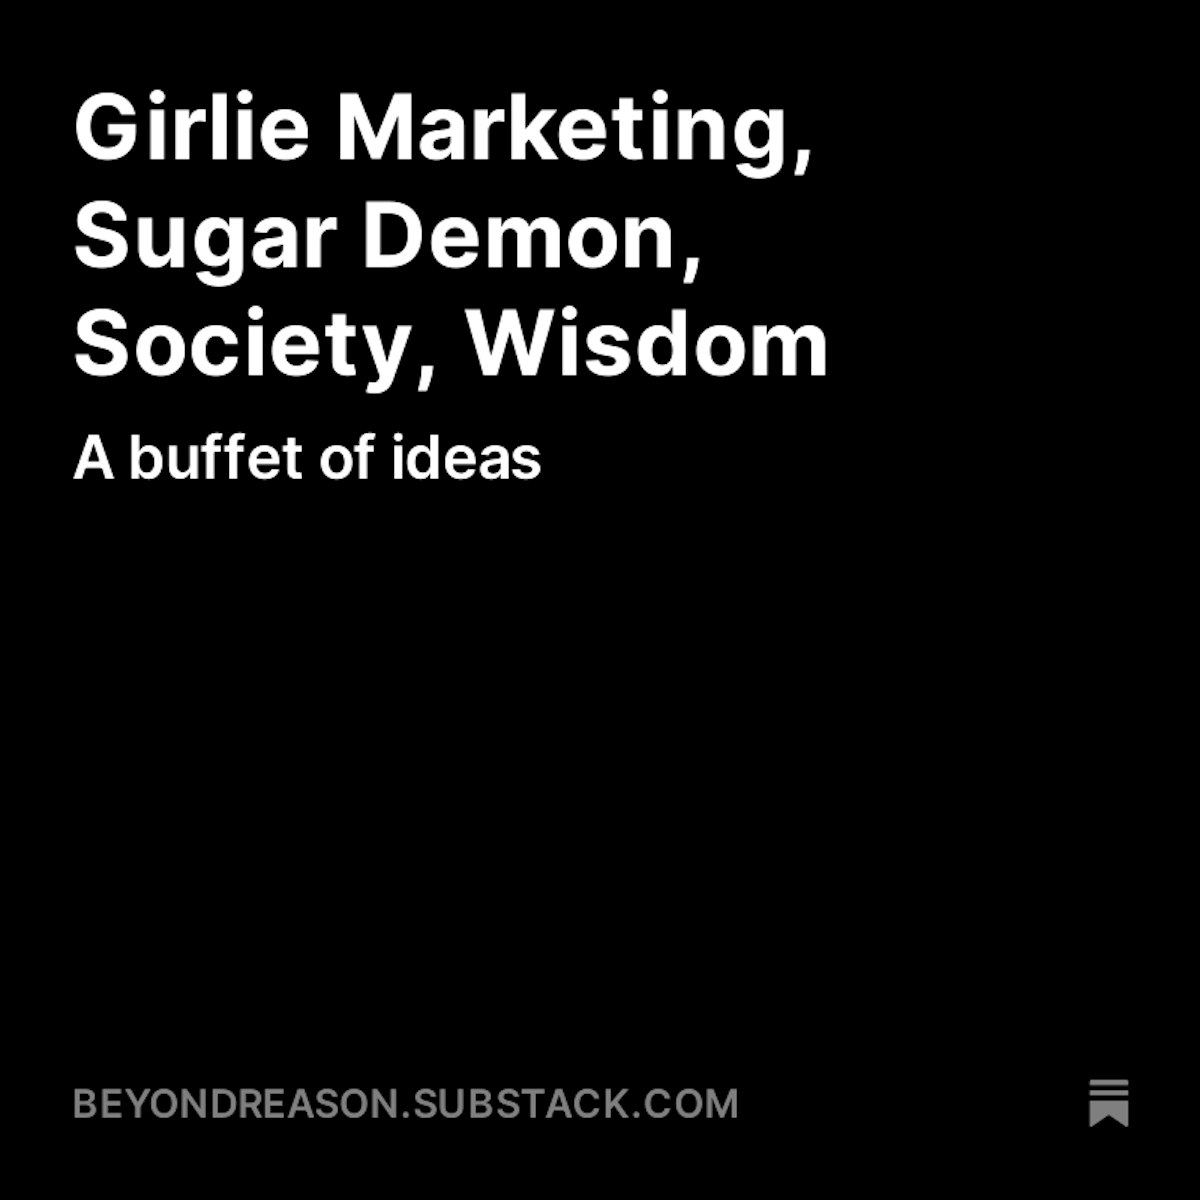 featured image - A Fun Medley: Girlie Marketing, Sugar Demon, Society, Wisdom, Principles